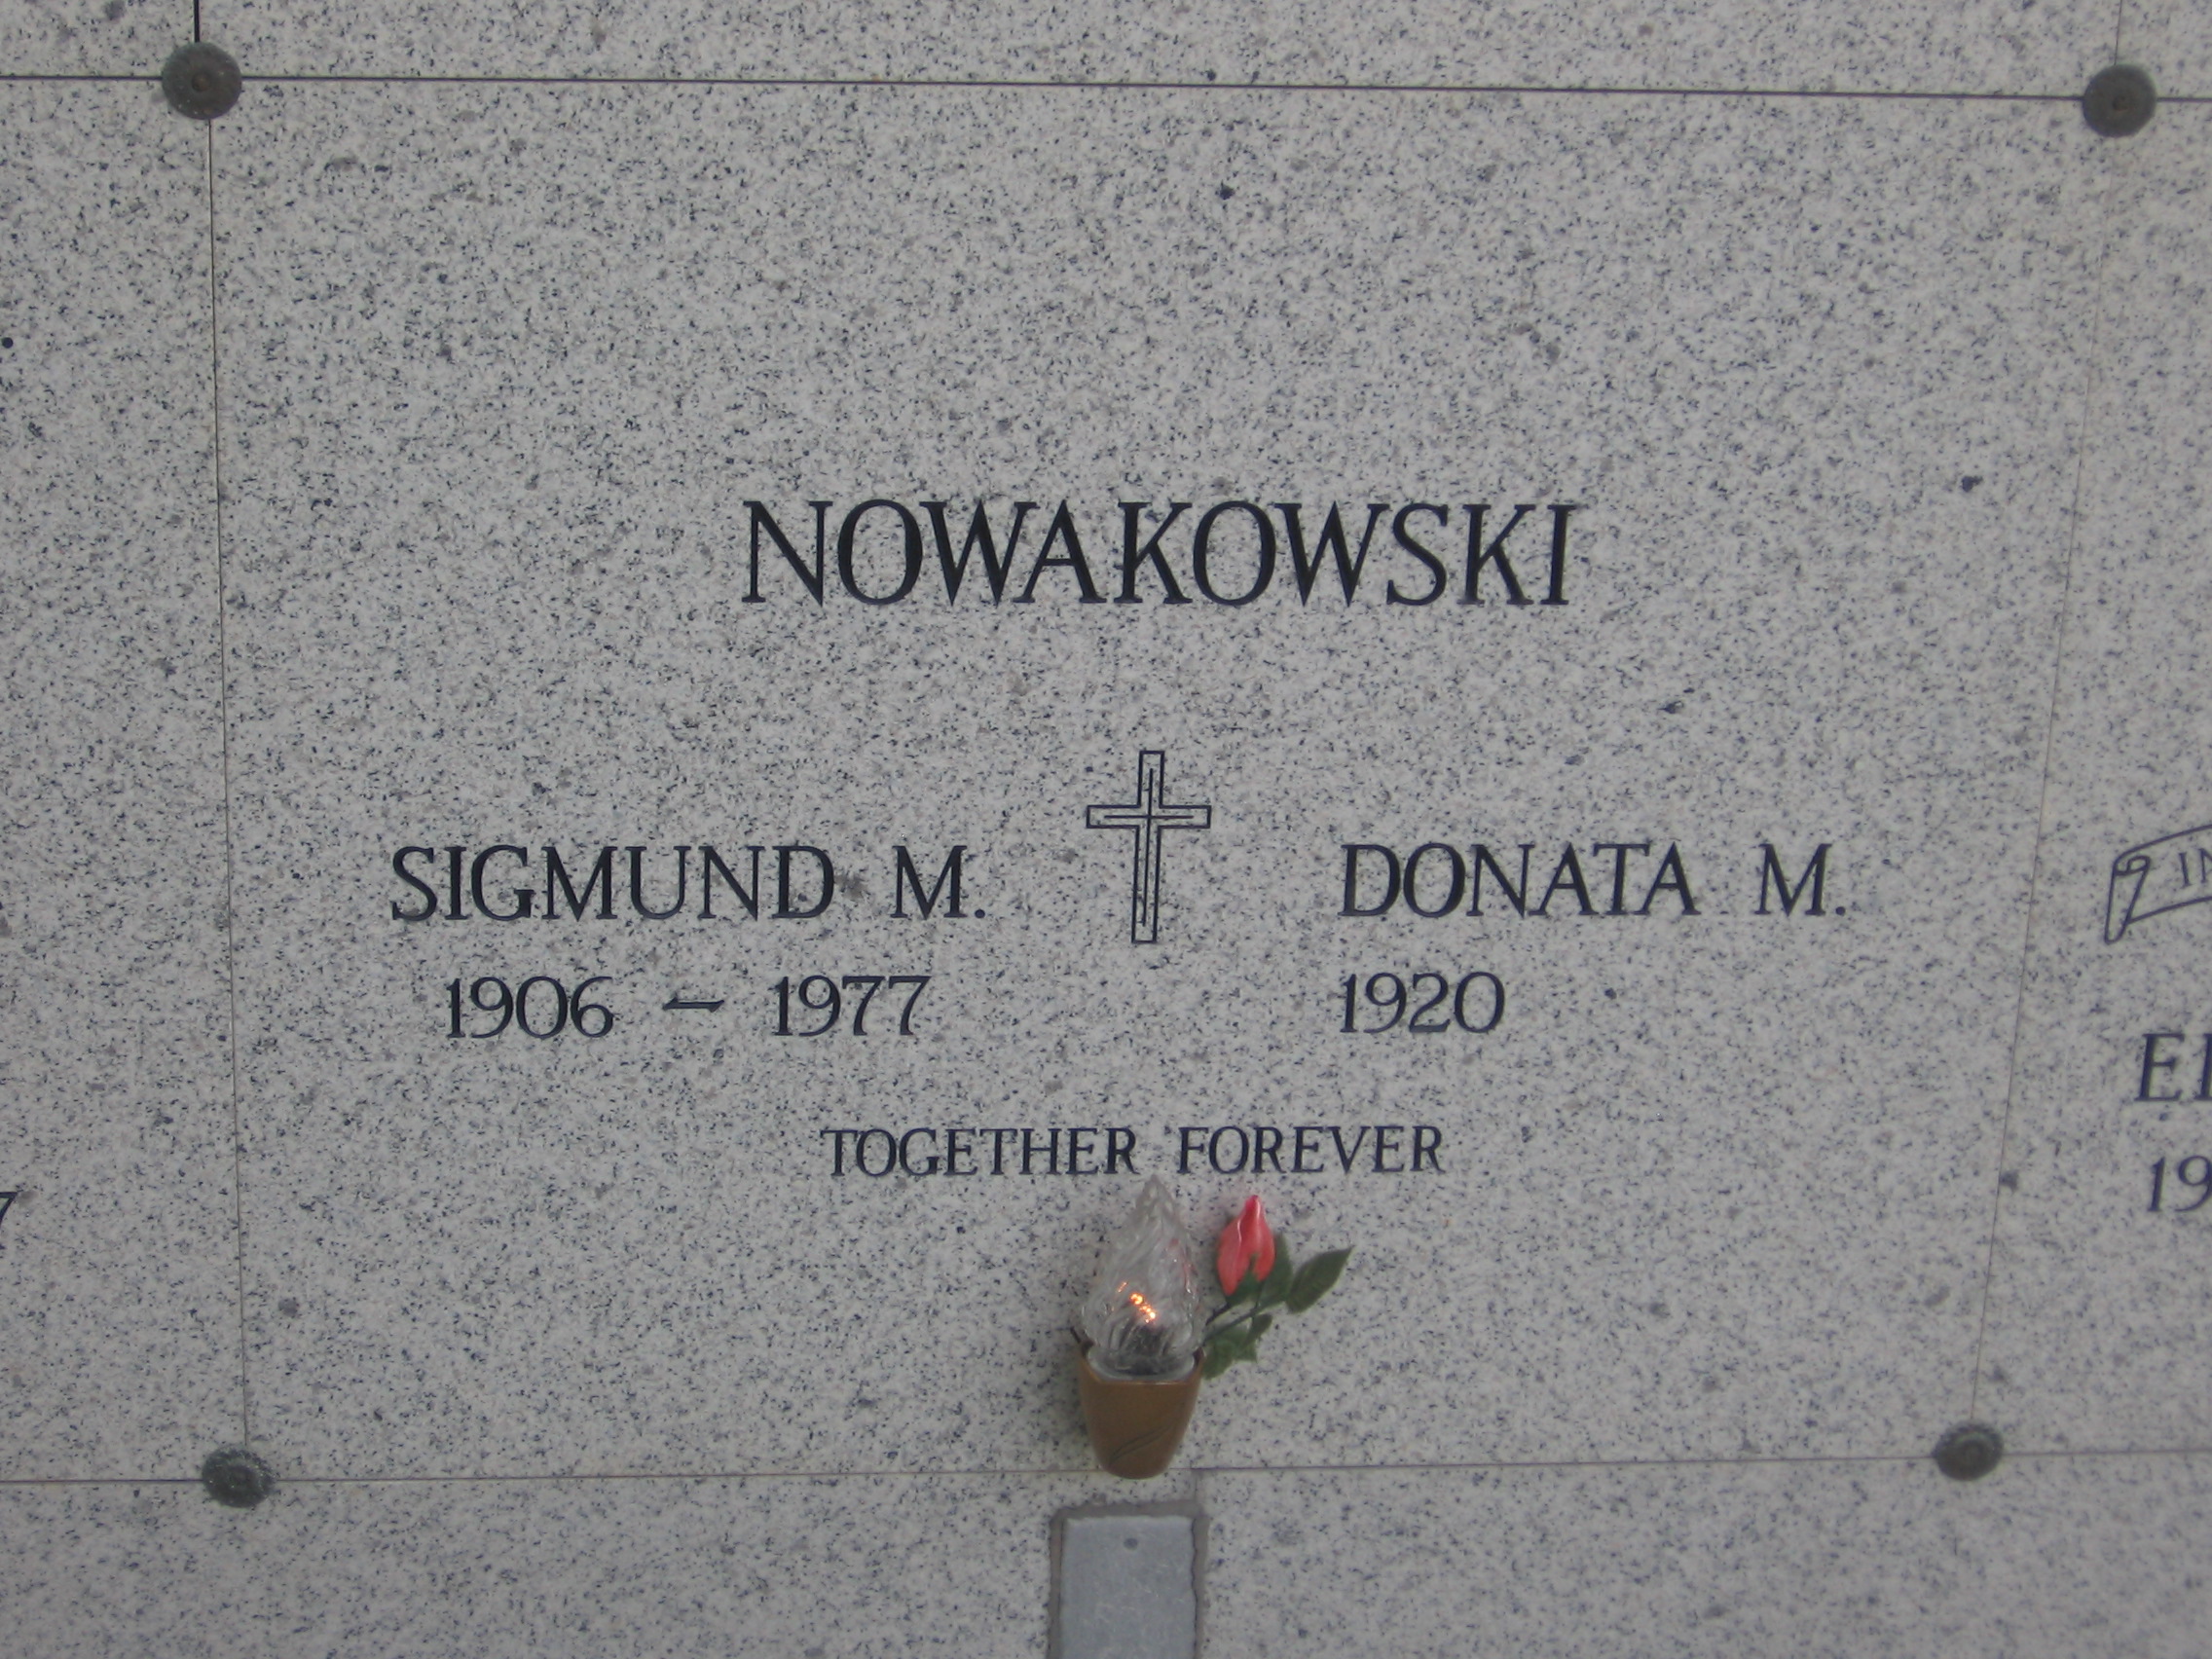 Sigmund M Nowakowski